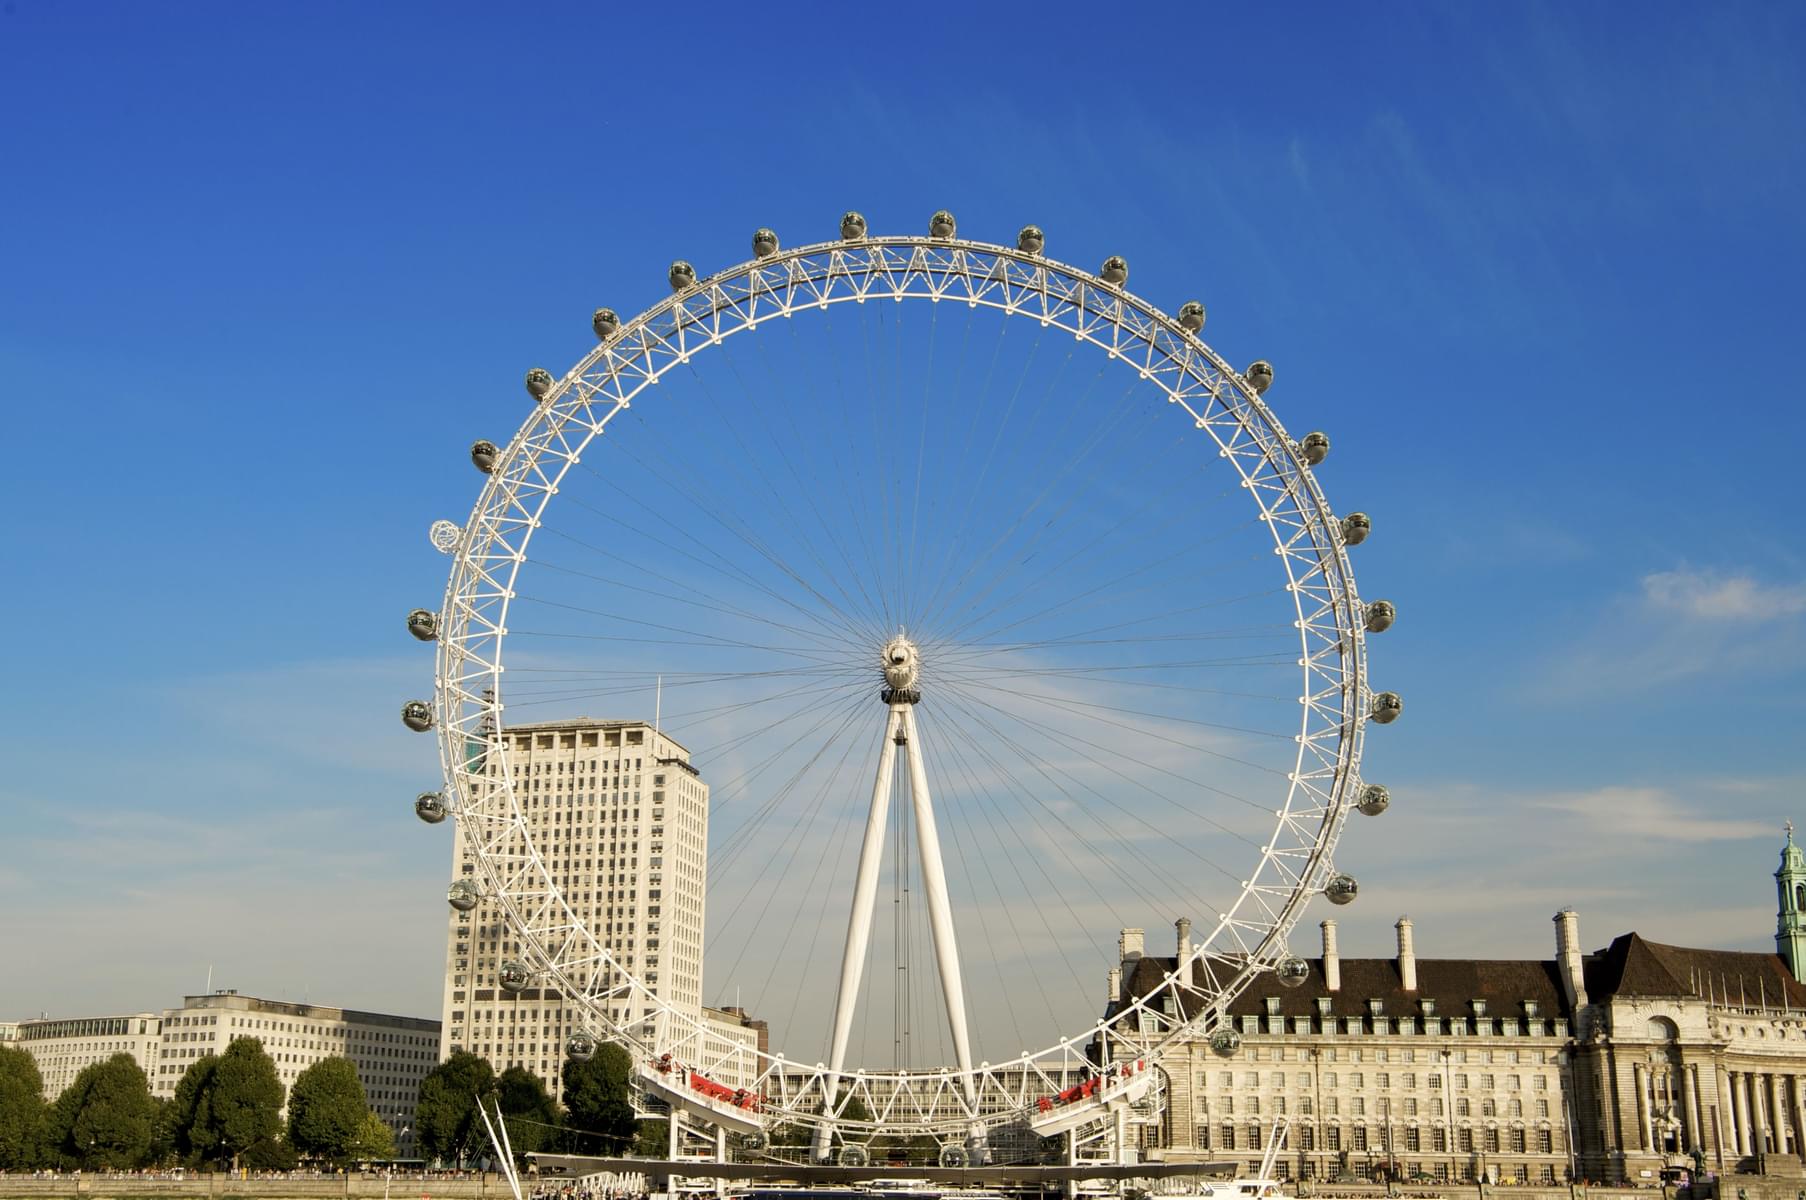 Why Visit The London Eye?